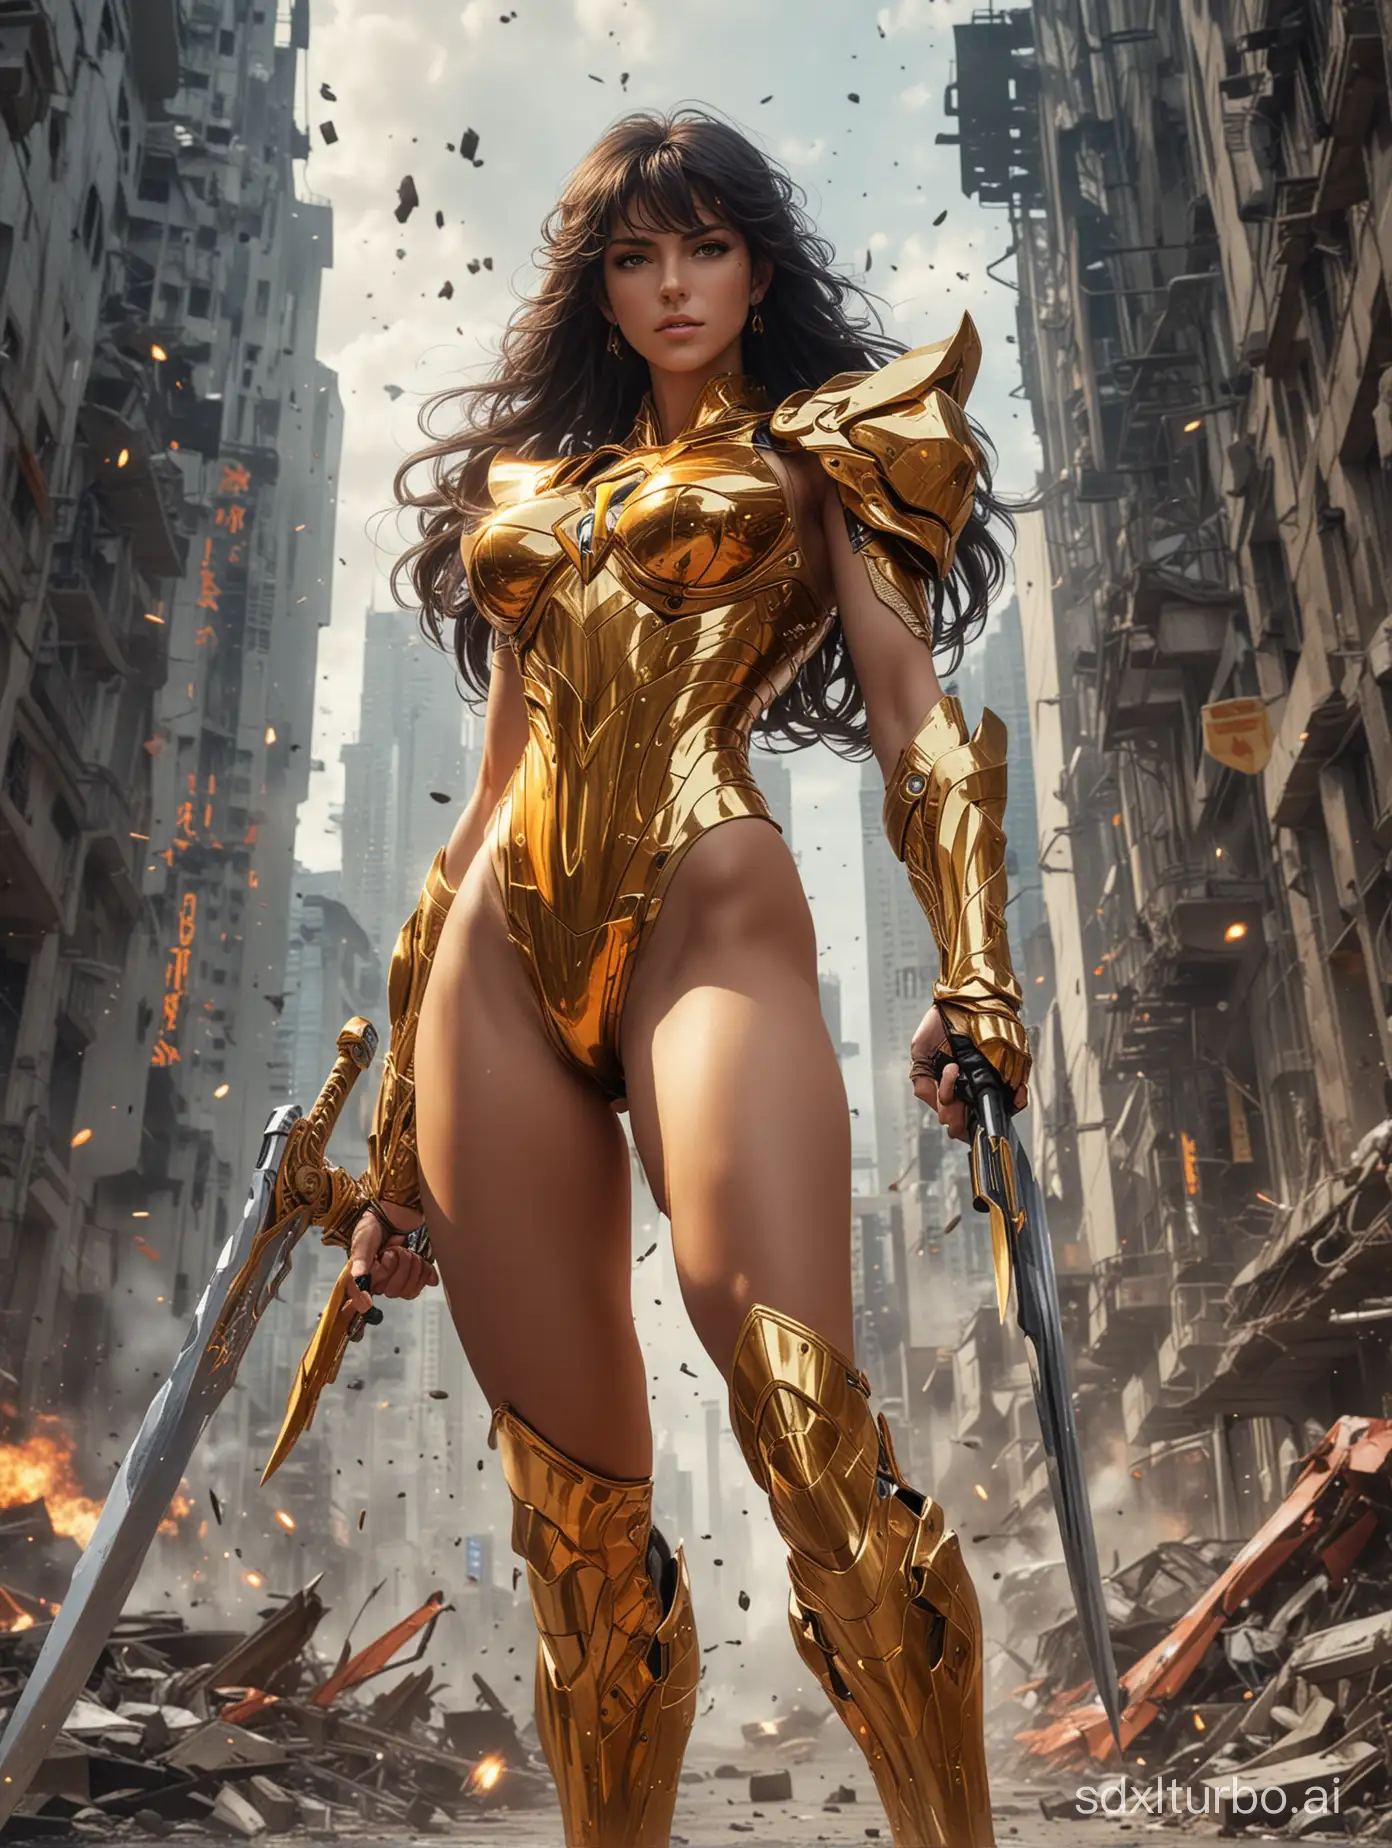 Futuristic-Golden-Saint-Warrior-Princess-amidst-Destruction-and-Explosions